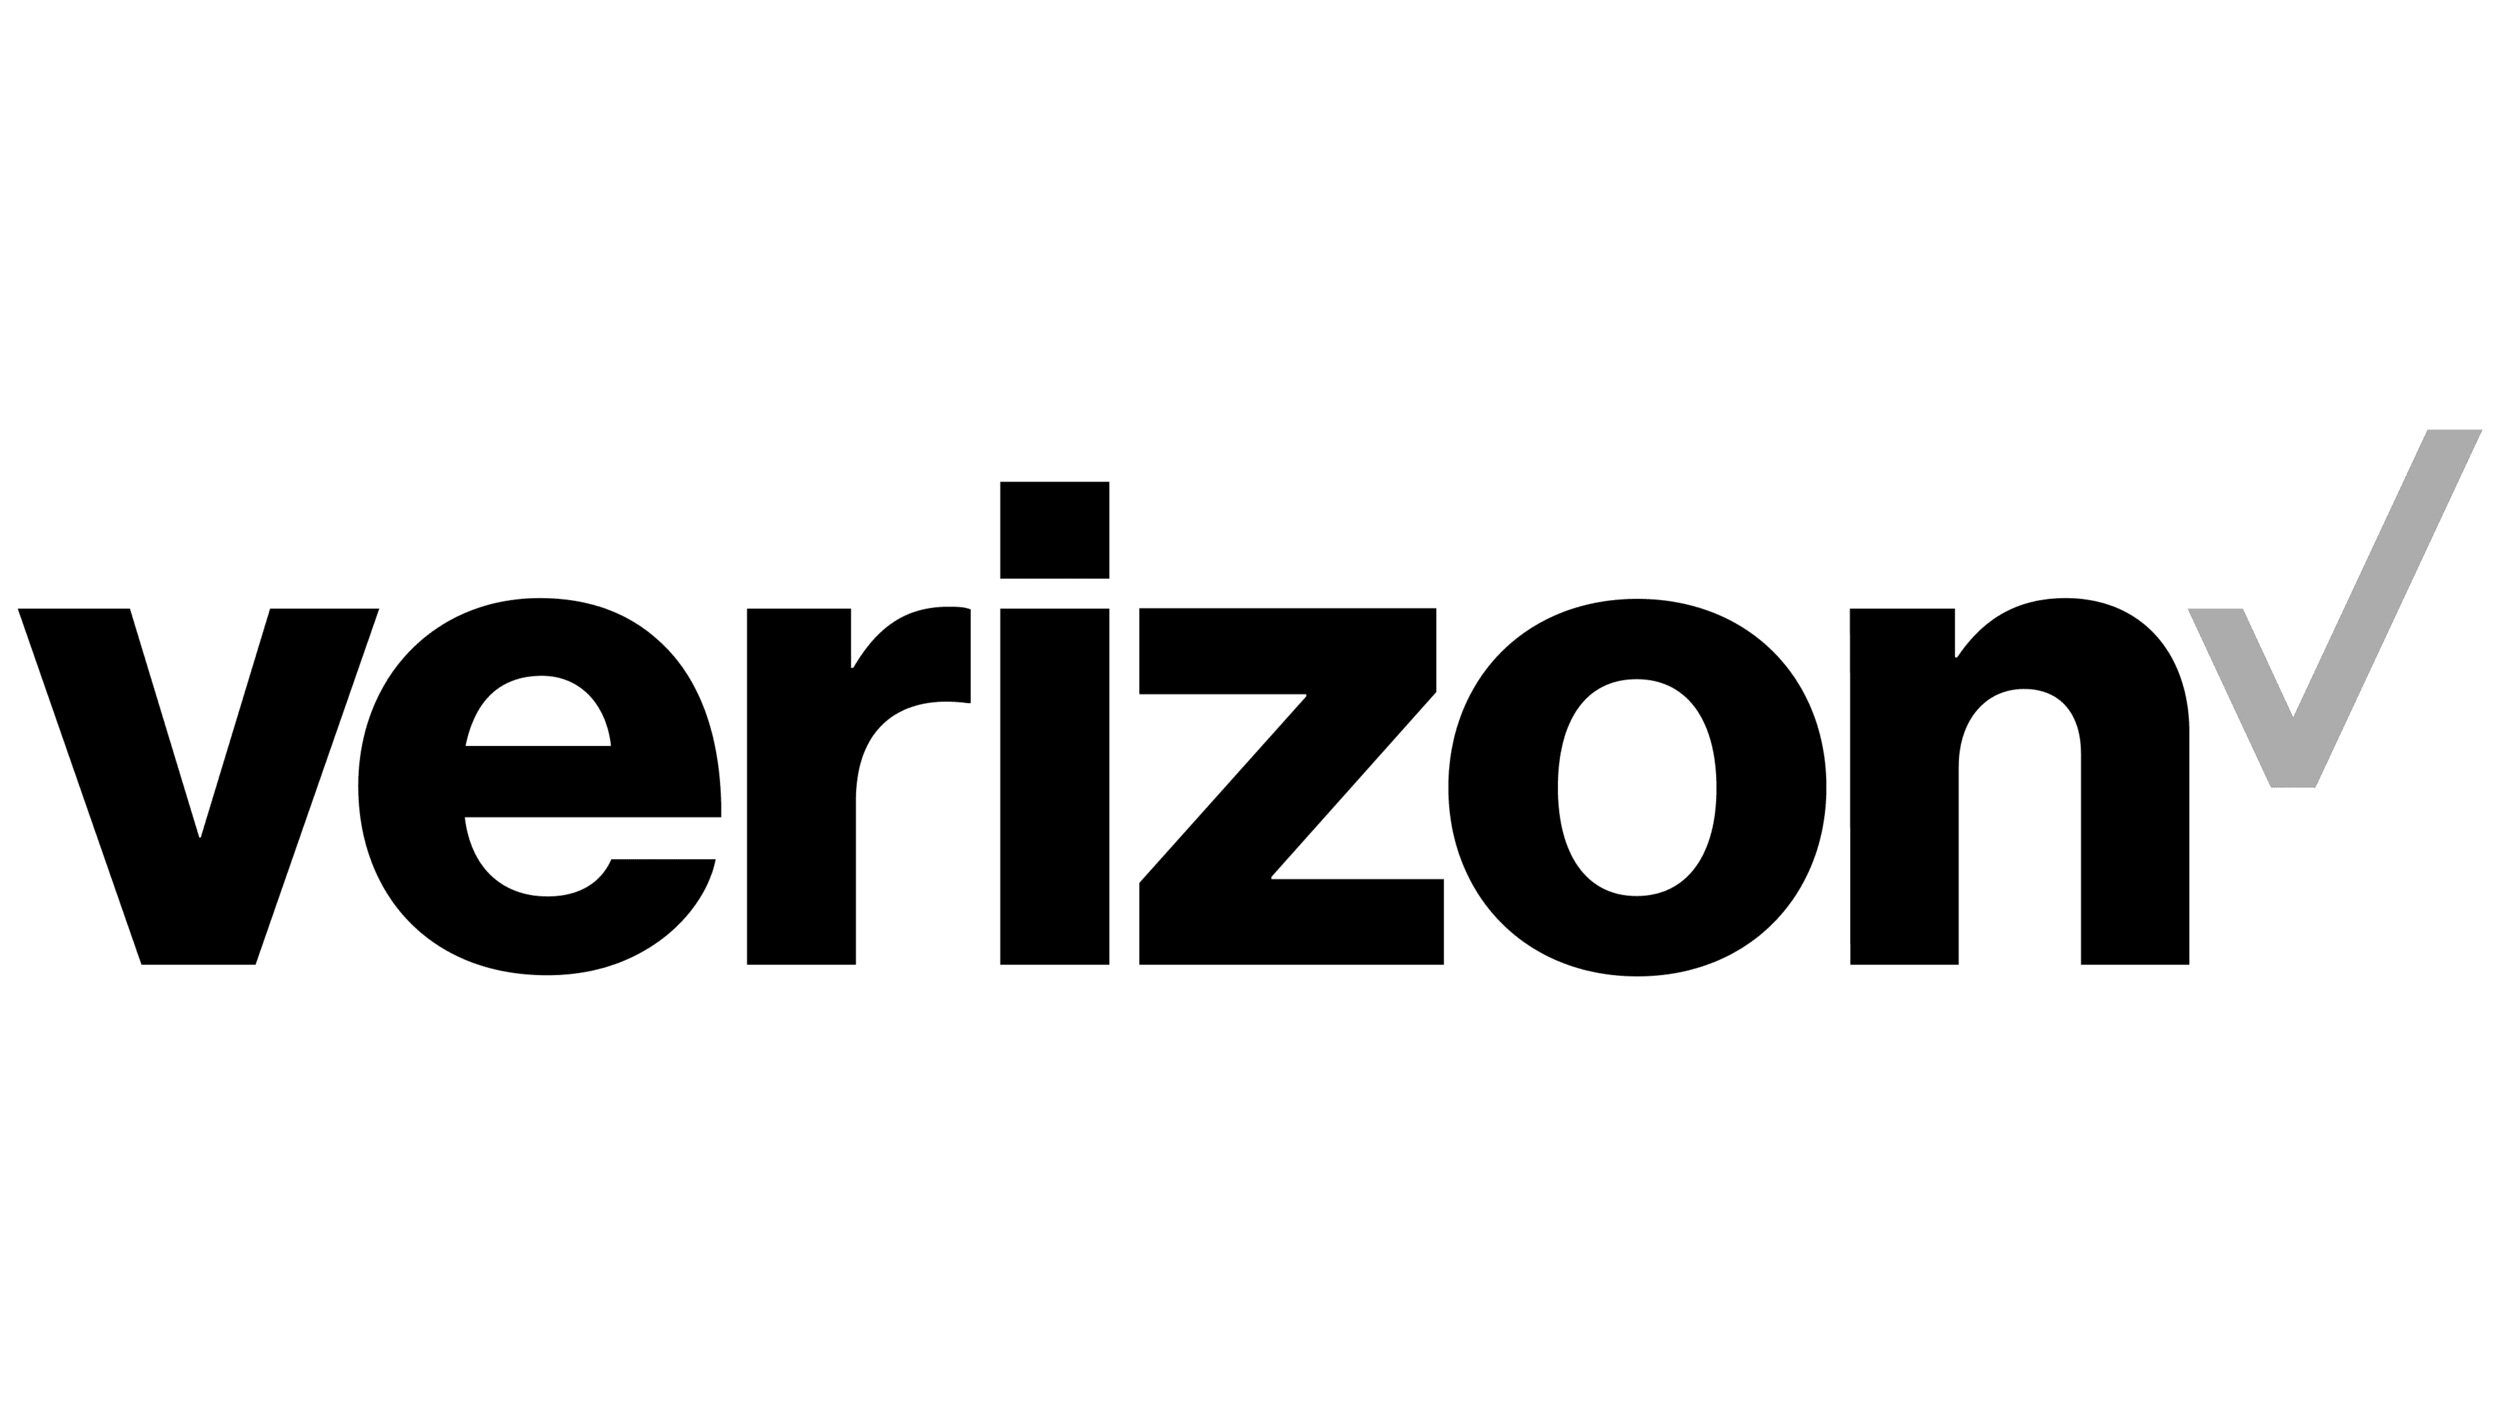 Verizon-logo.jpg